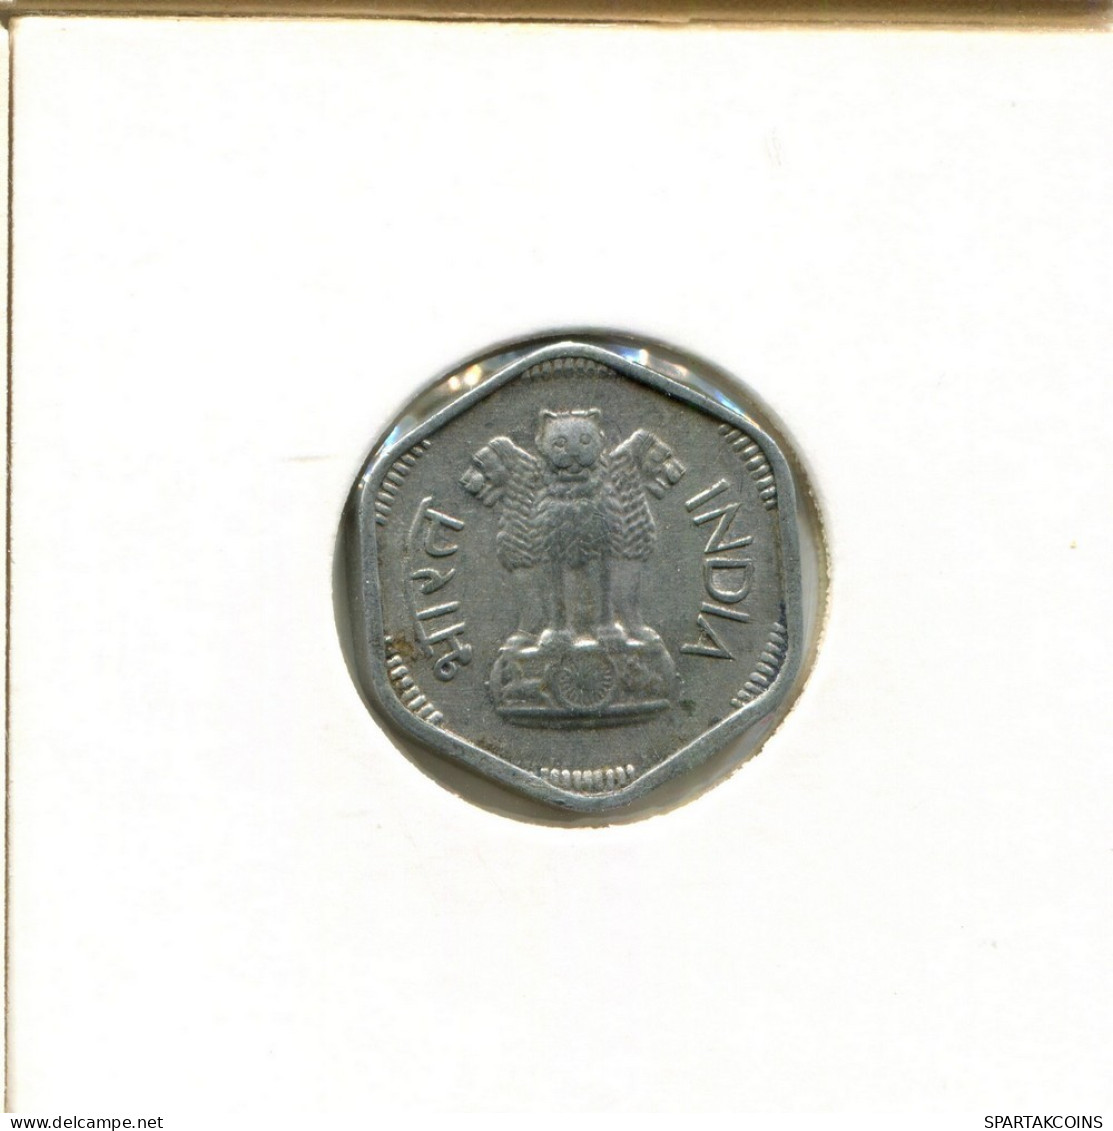 3 PAISE 1967 INDIA Coin #AY725.U.A - Inde